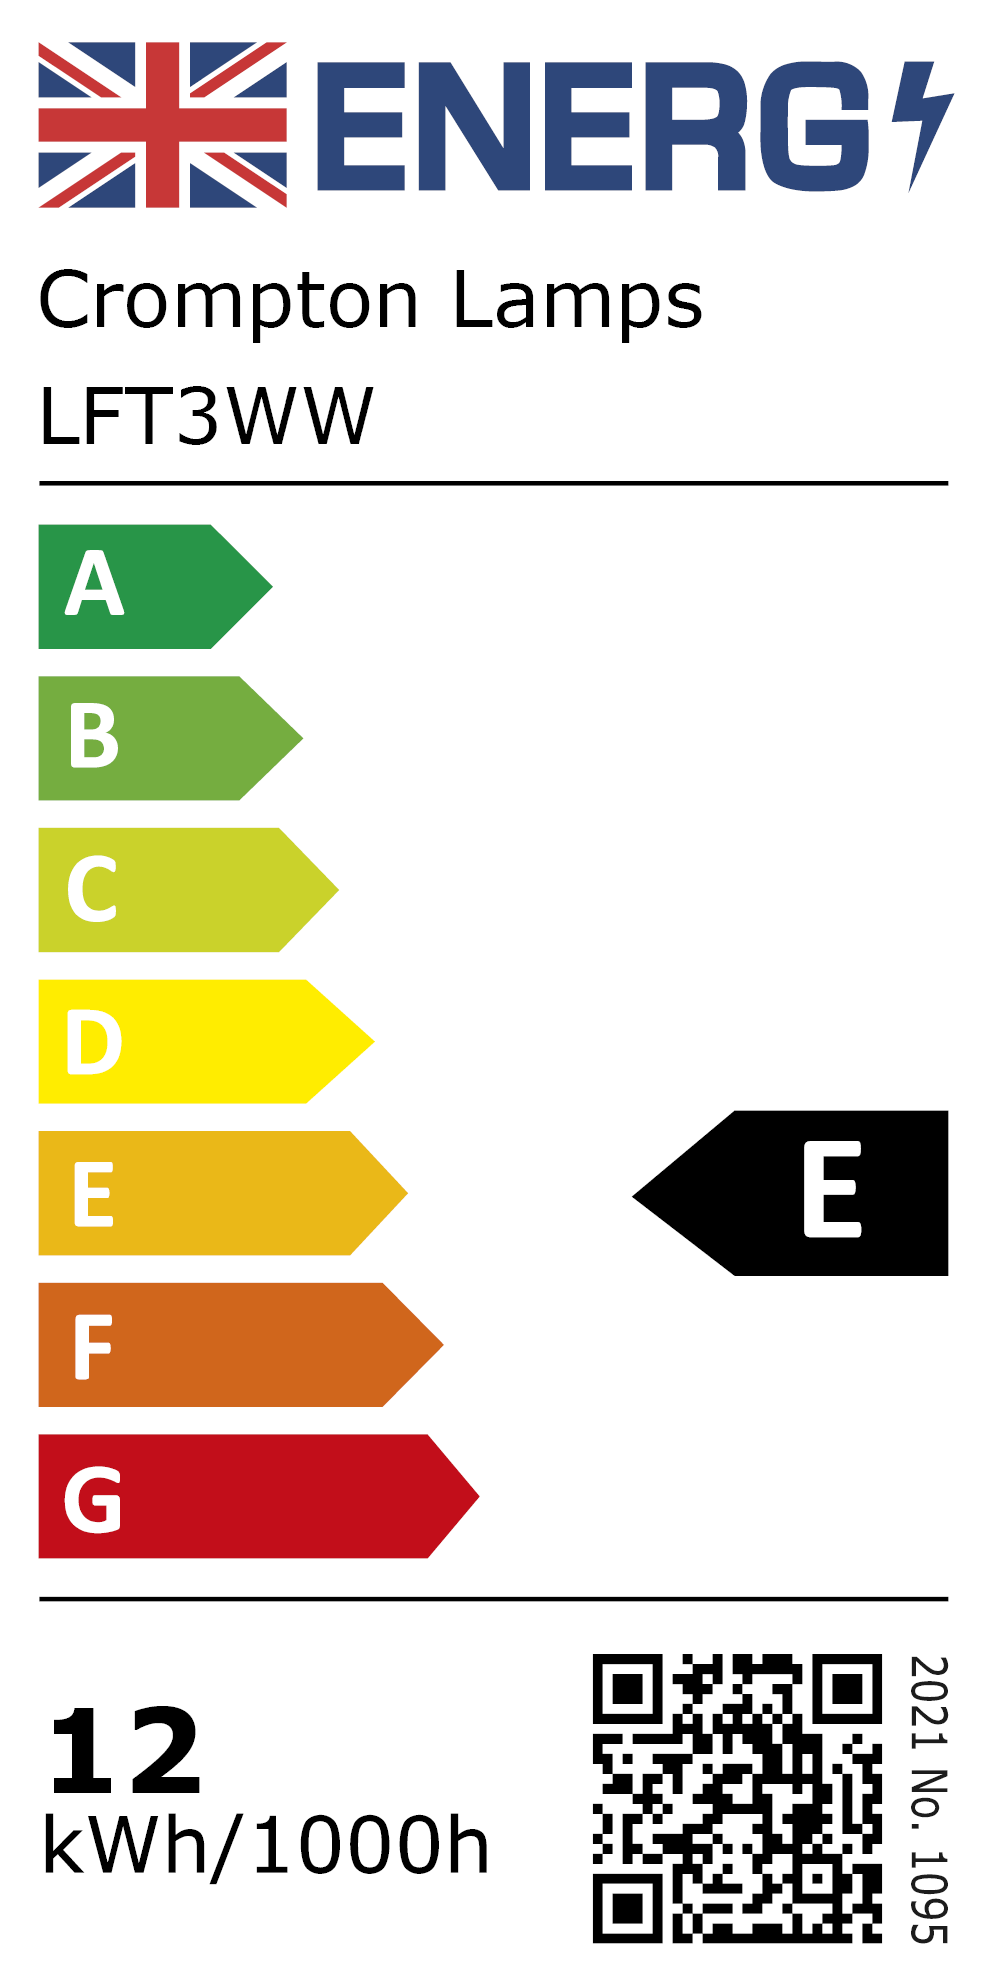 New 2021 Energy Rating Label: Stock Code LFT3WW